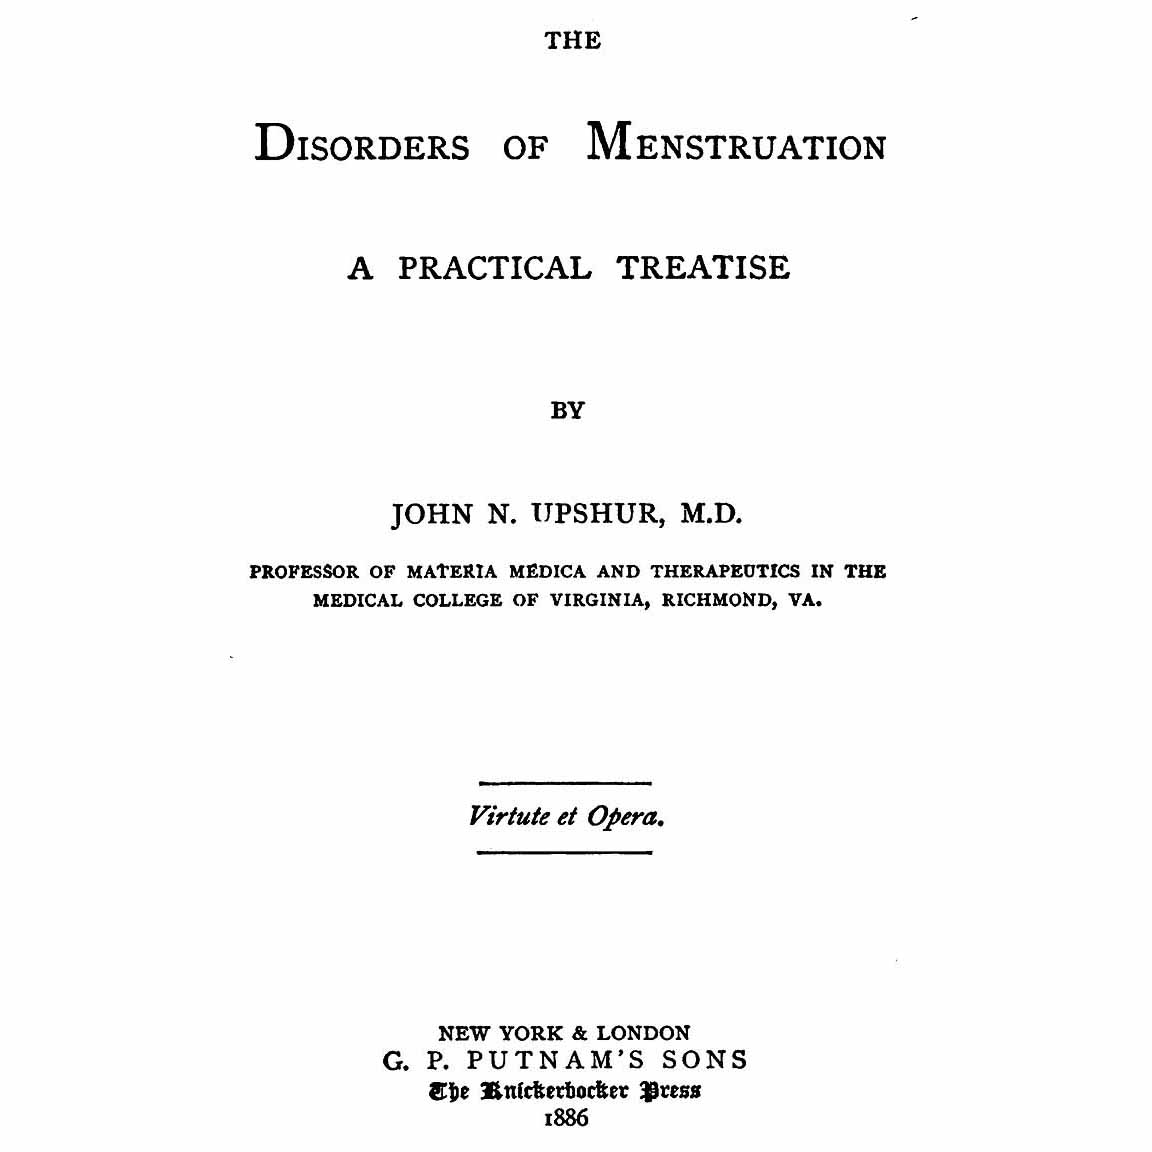 1886-UPSHUR-Disorders-Menstruation-title